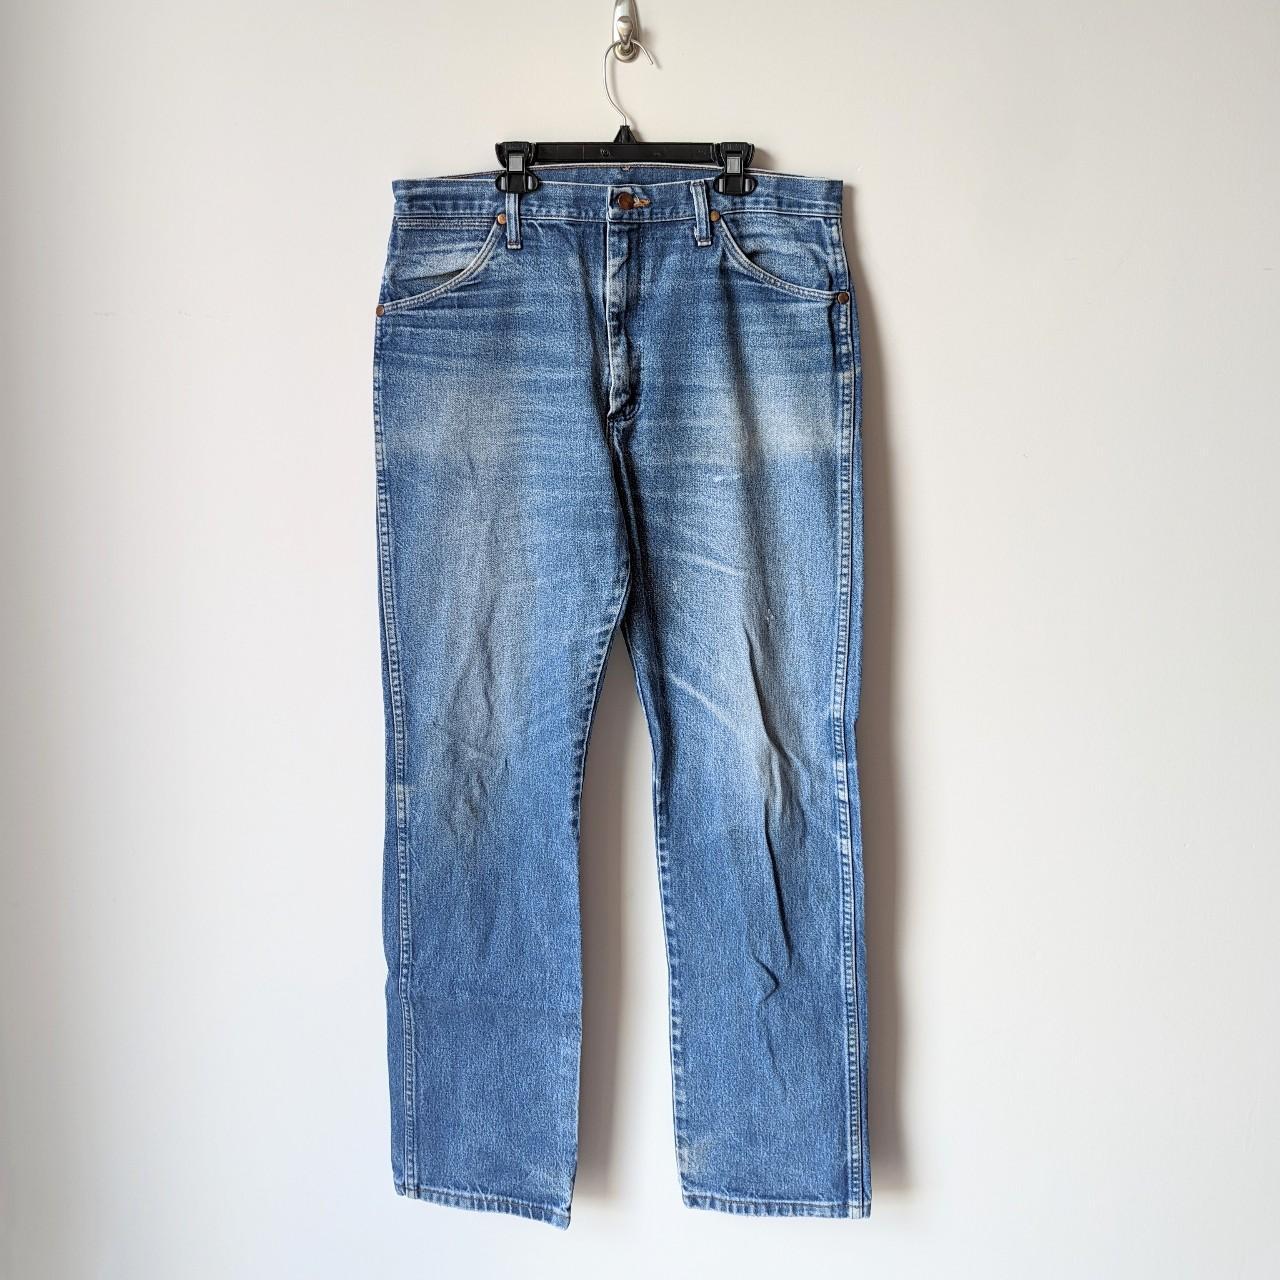 Wrangler Men's Blue and Navy Jeans | Depop